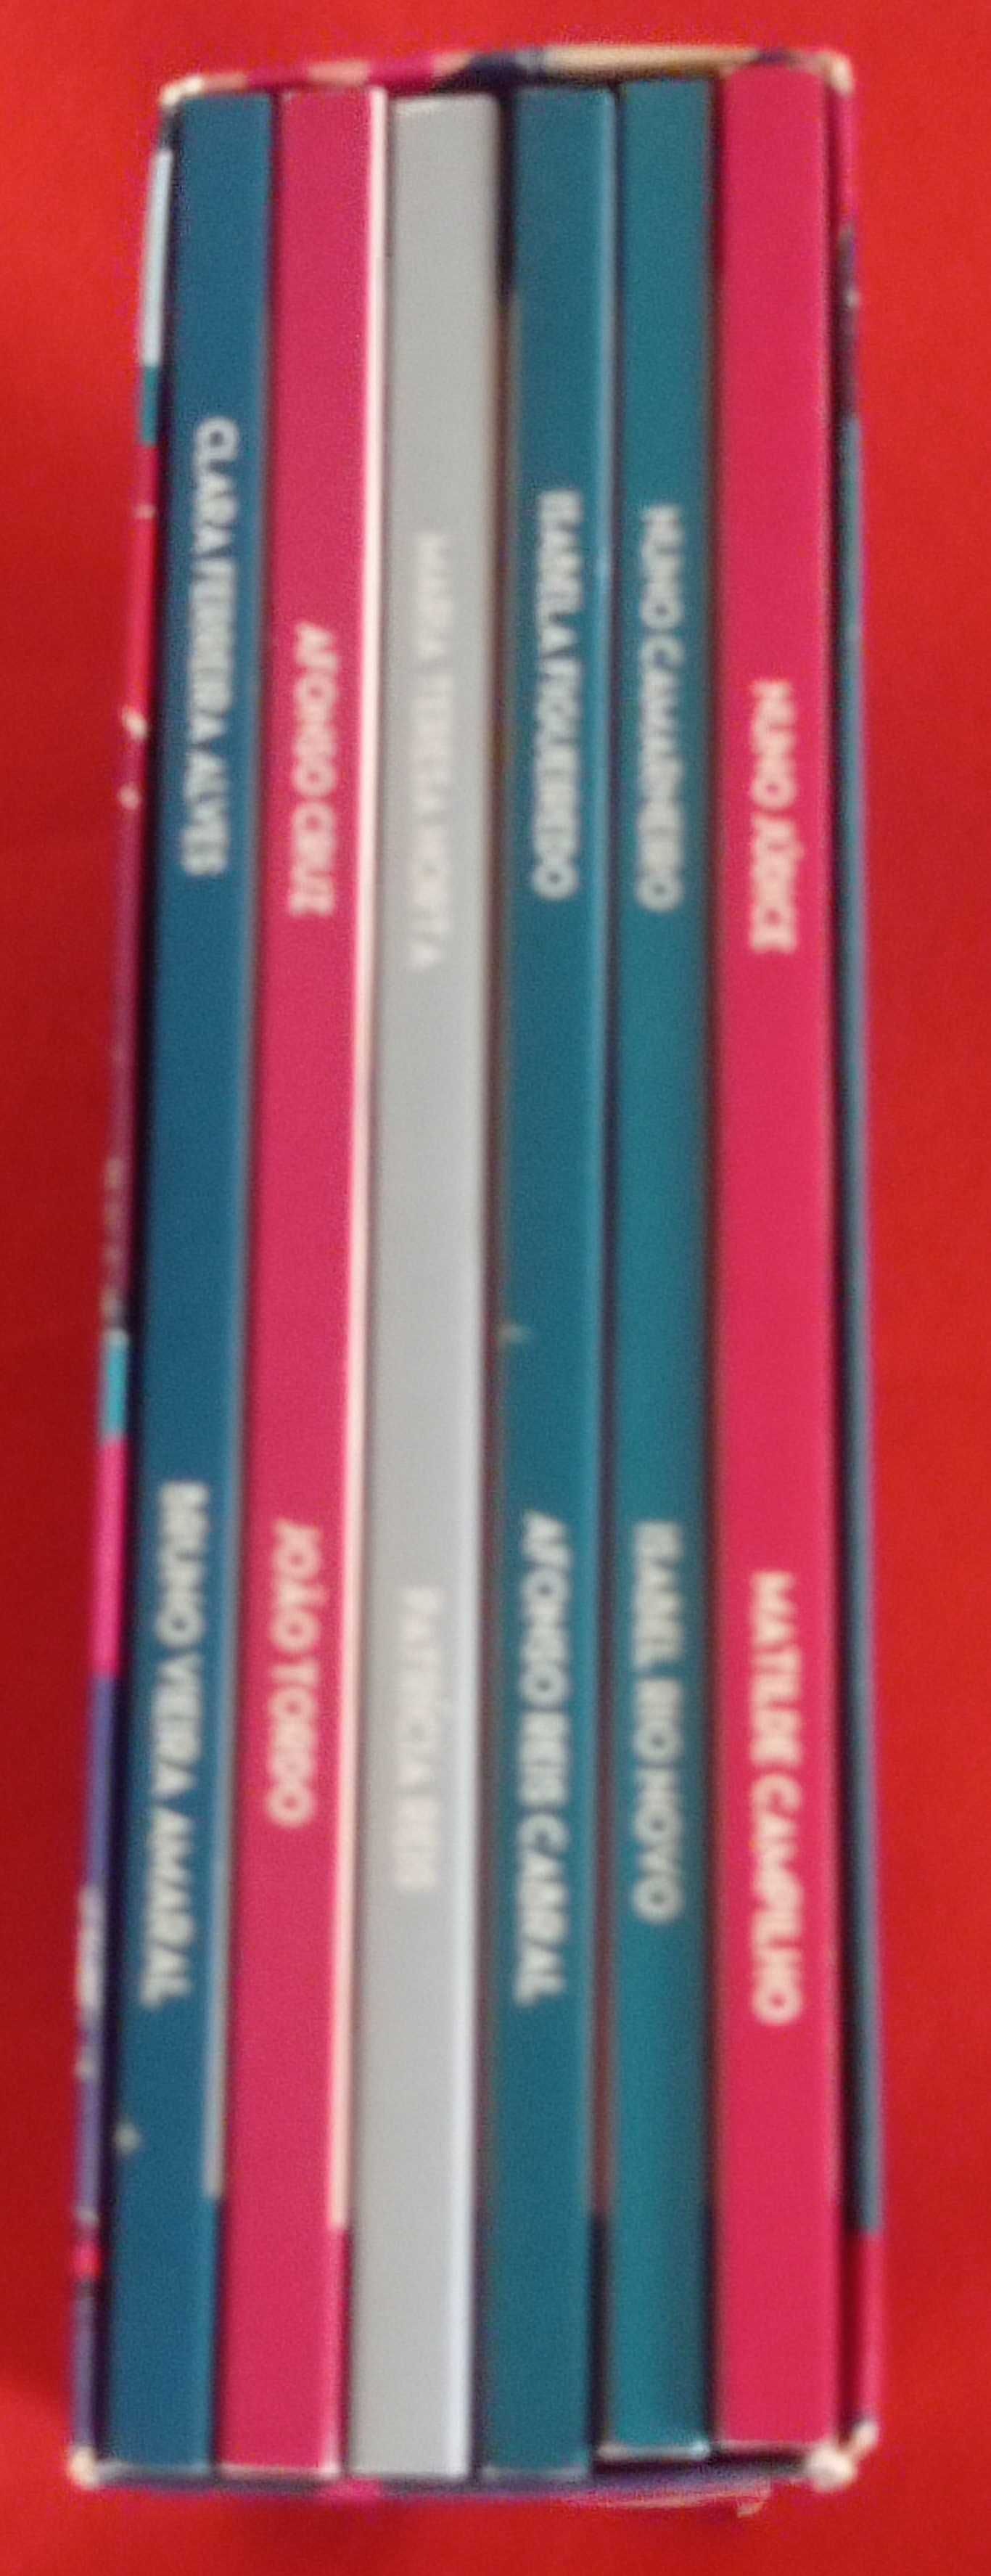 Coletânea completa Literatura (volumes).